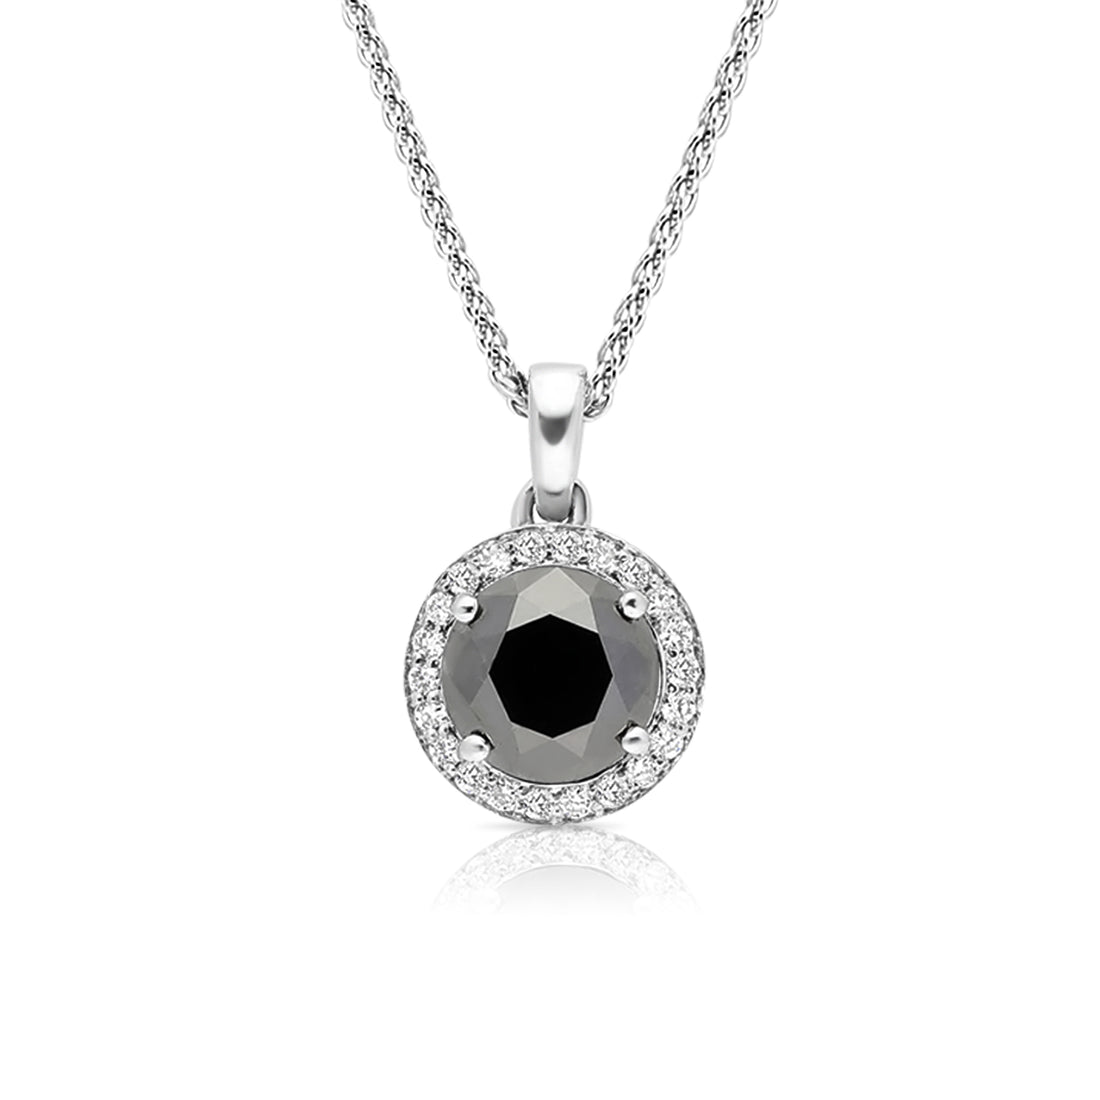 Classic Black Diamond Pendant Necklace - 1.7 Carat